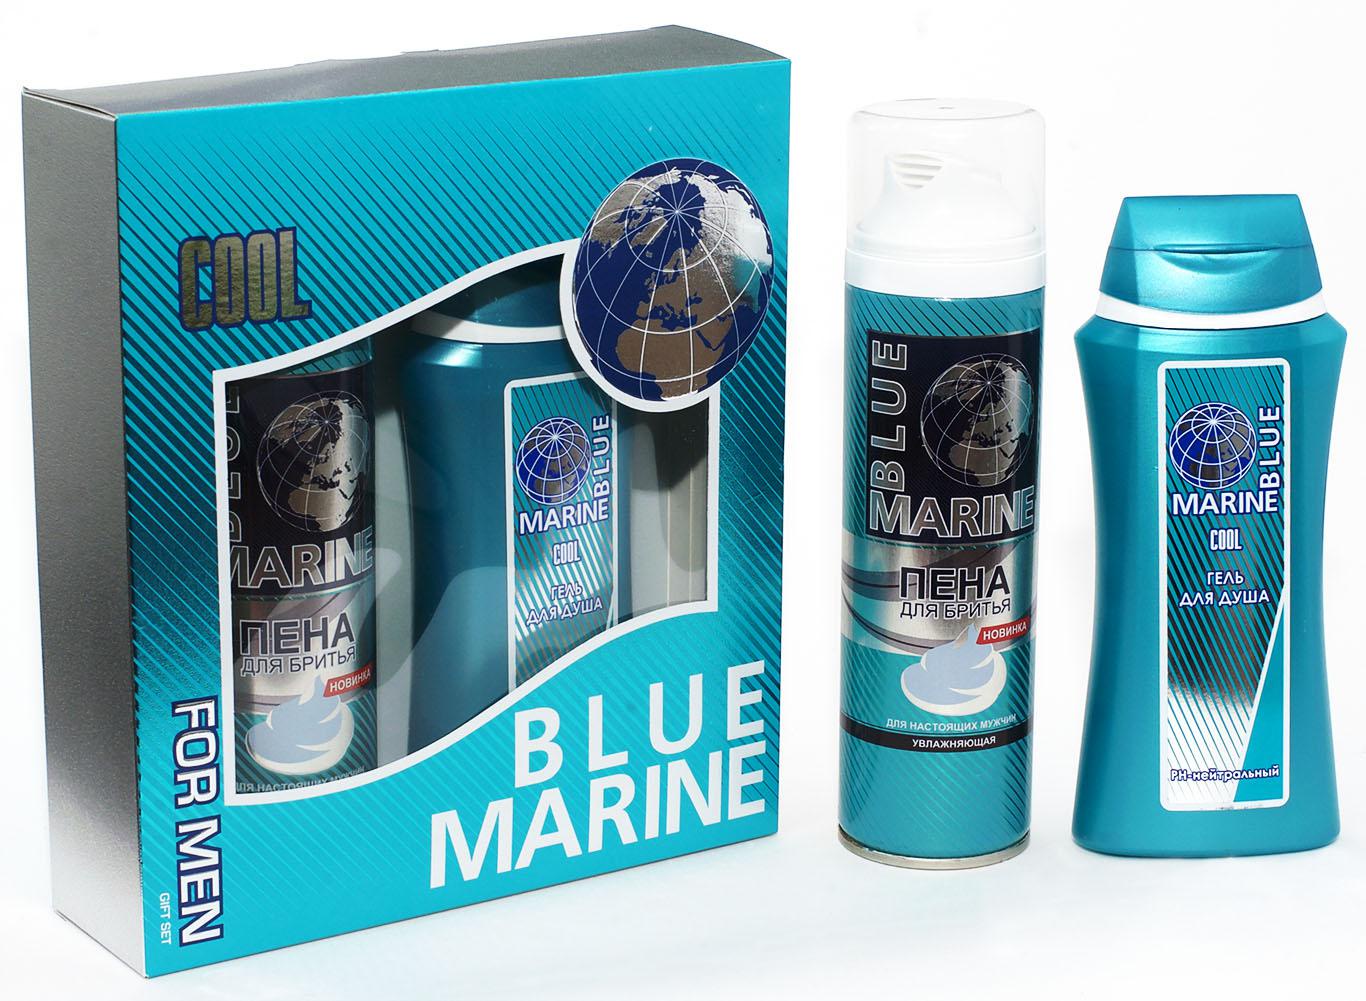 Cool cool гель для душа. Festiva шампунь Blue Marine cool для мужчин. Пн фестива Blue Marine №072 (шампунь250мл+пена д/бритья200мл) муж. 091м набор муж Blue Marine cool (шампунь 250 мл + гель д/душа 250 мл) Mini /12.